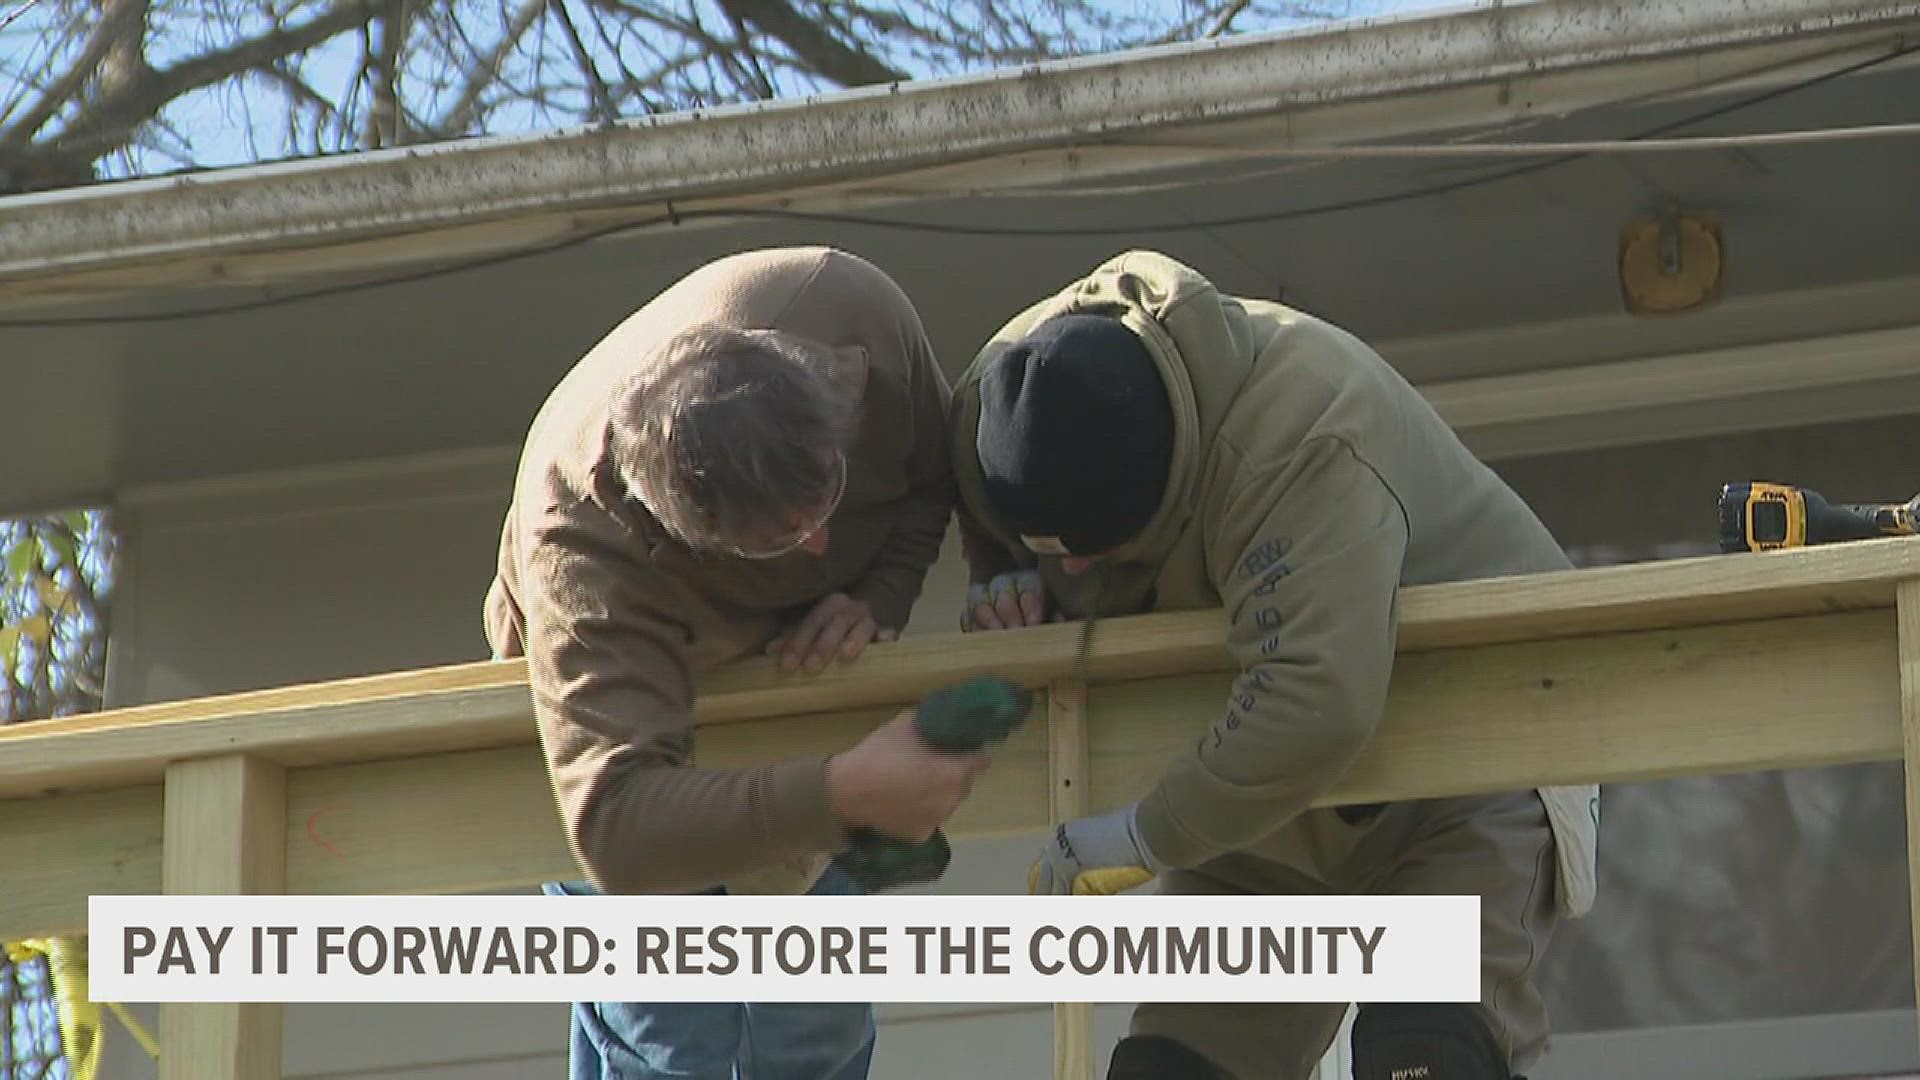 Habitat for Humanity volunteers help restore homes in need